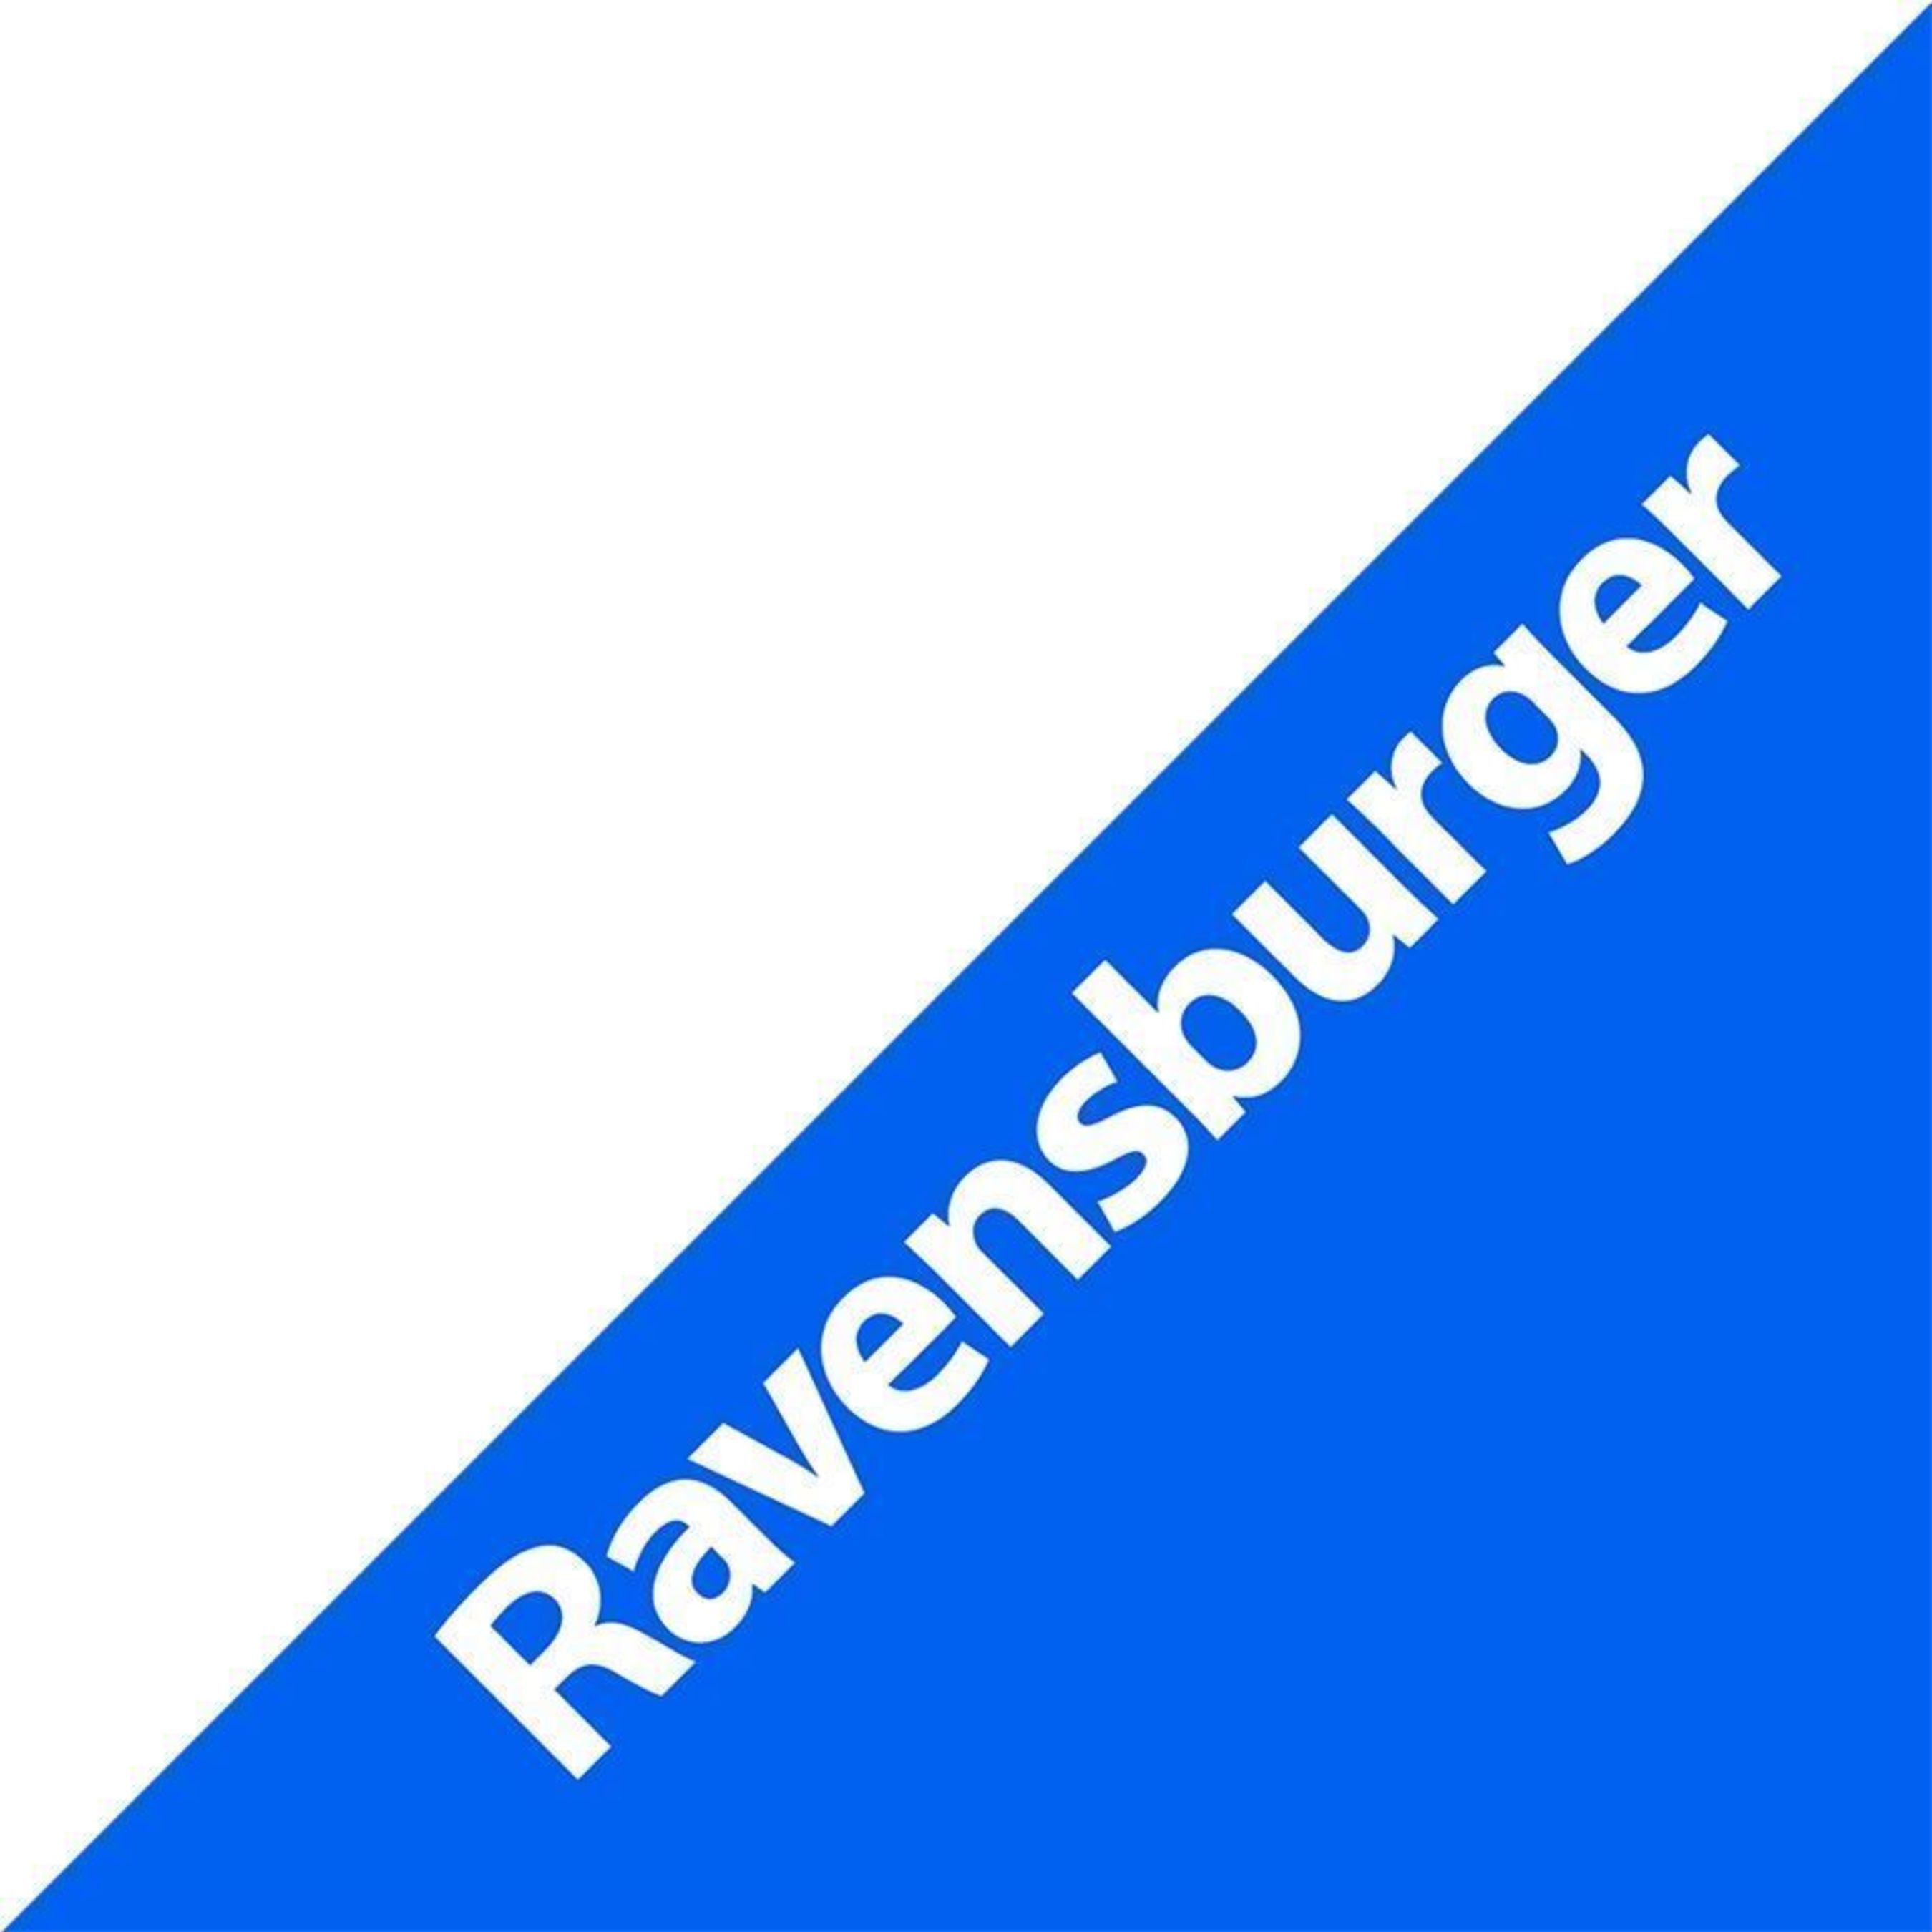 Ravensburger Acquires Renowned Swedish Toy Company BRIO